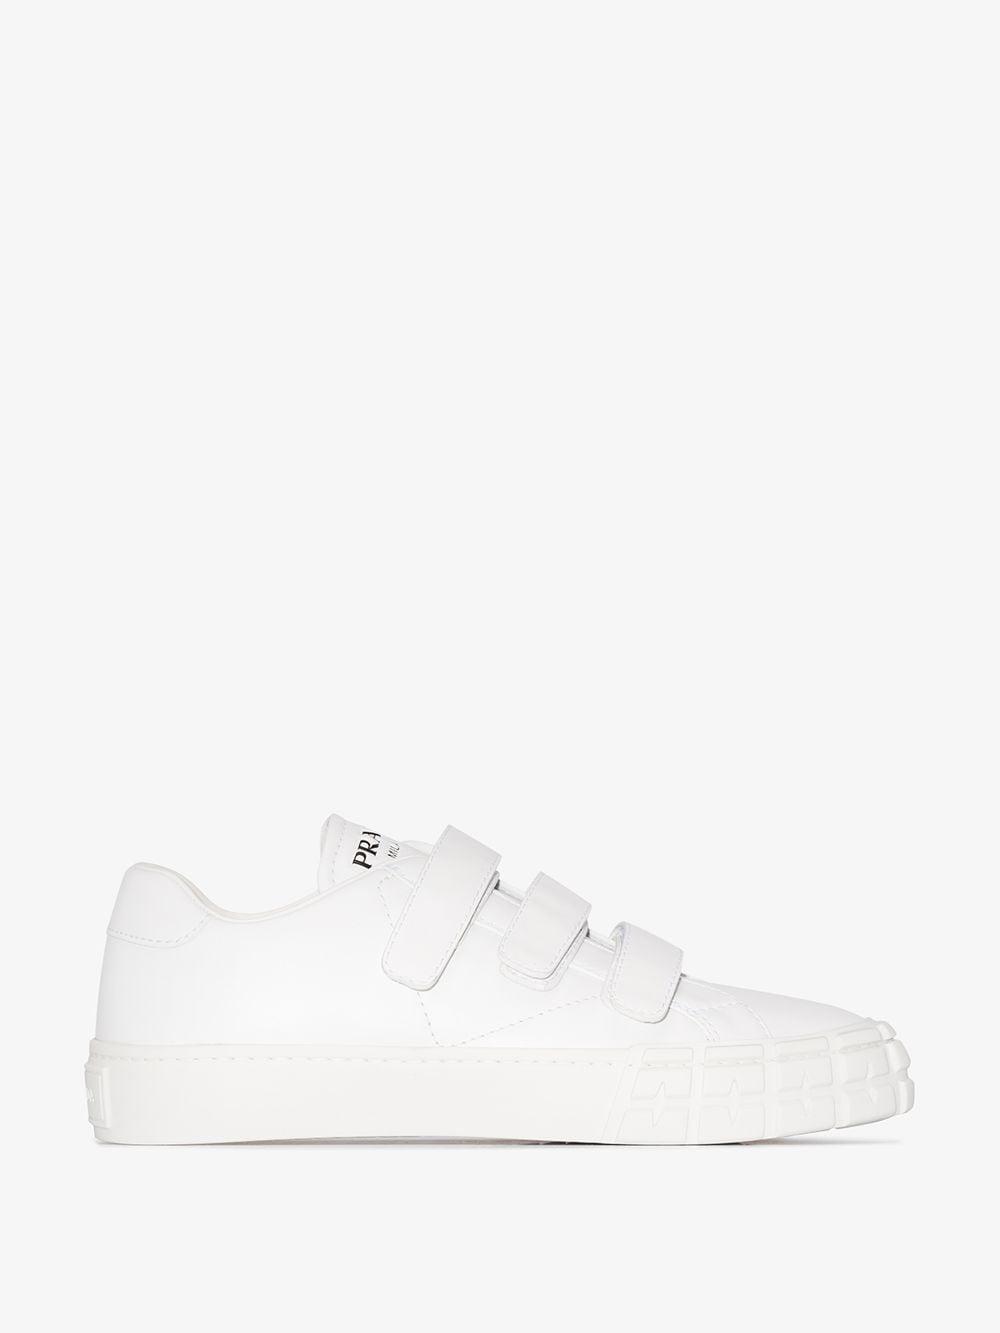 Prada Leather Wheel Velcro Sneakers in White | Lyst